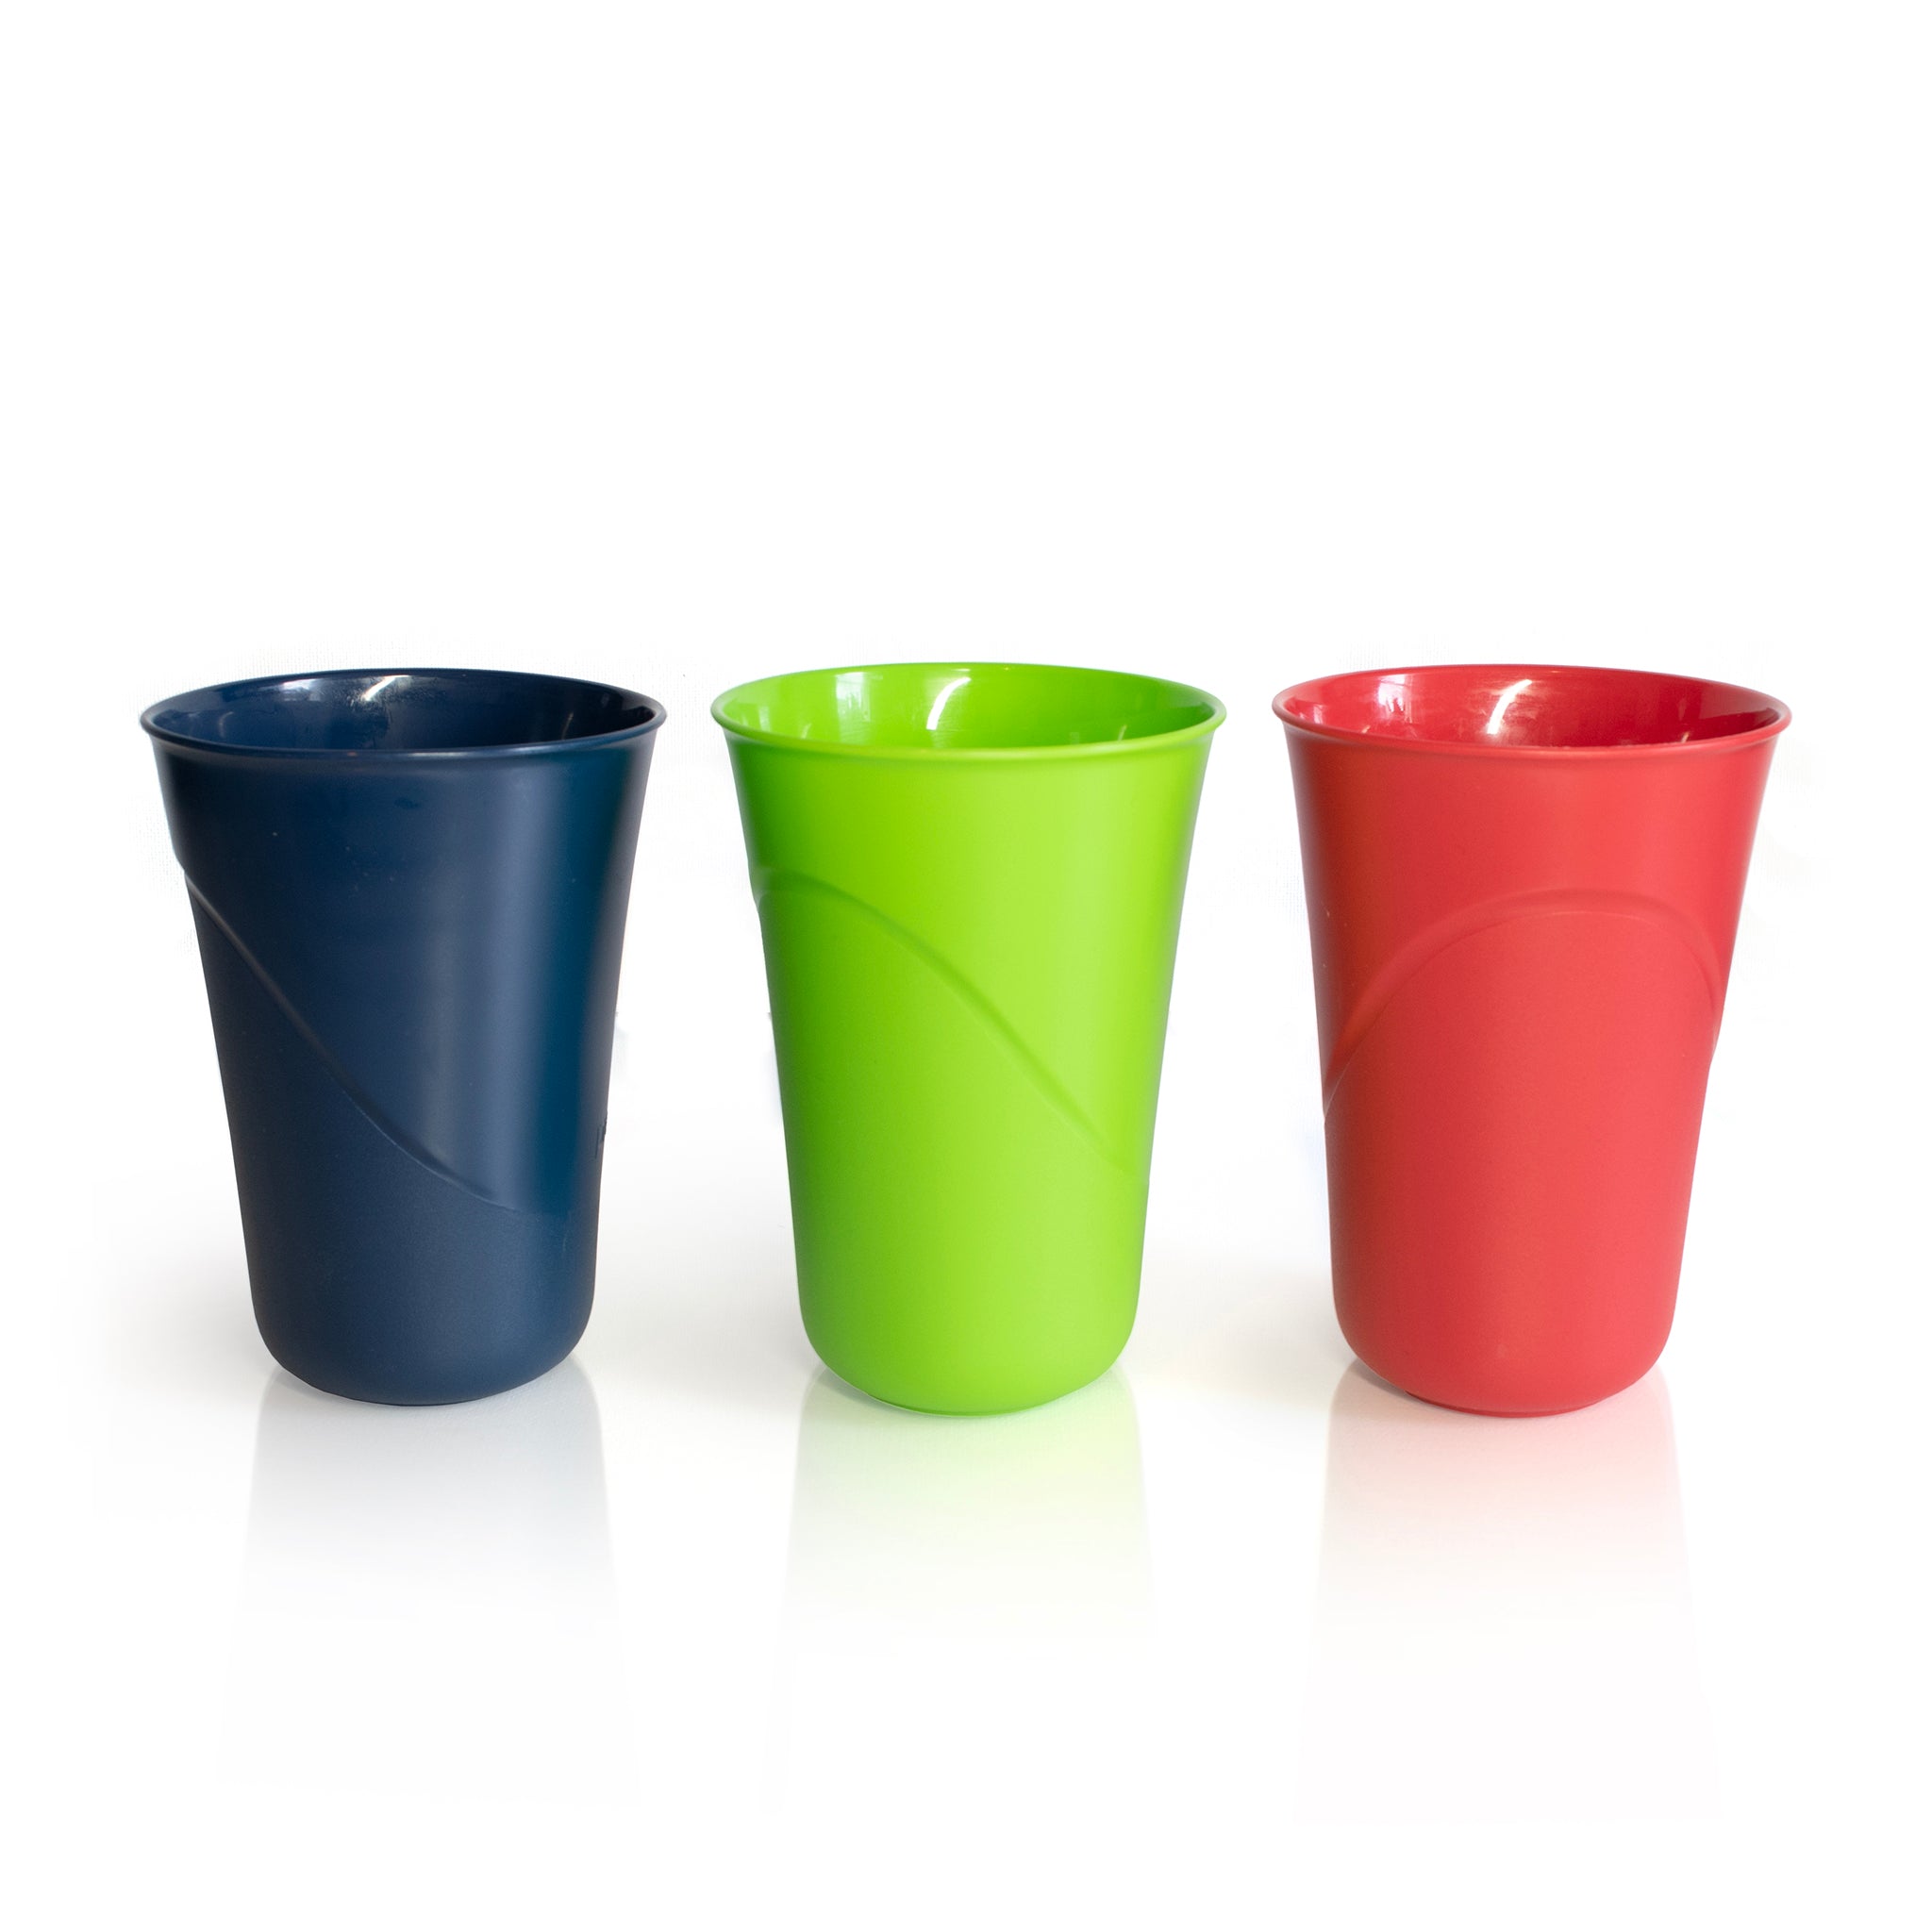 Al Fresco recycles plastic cups